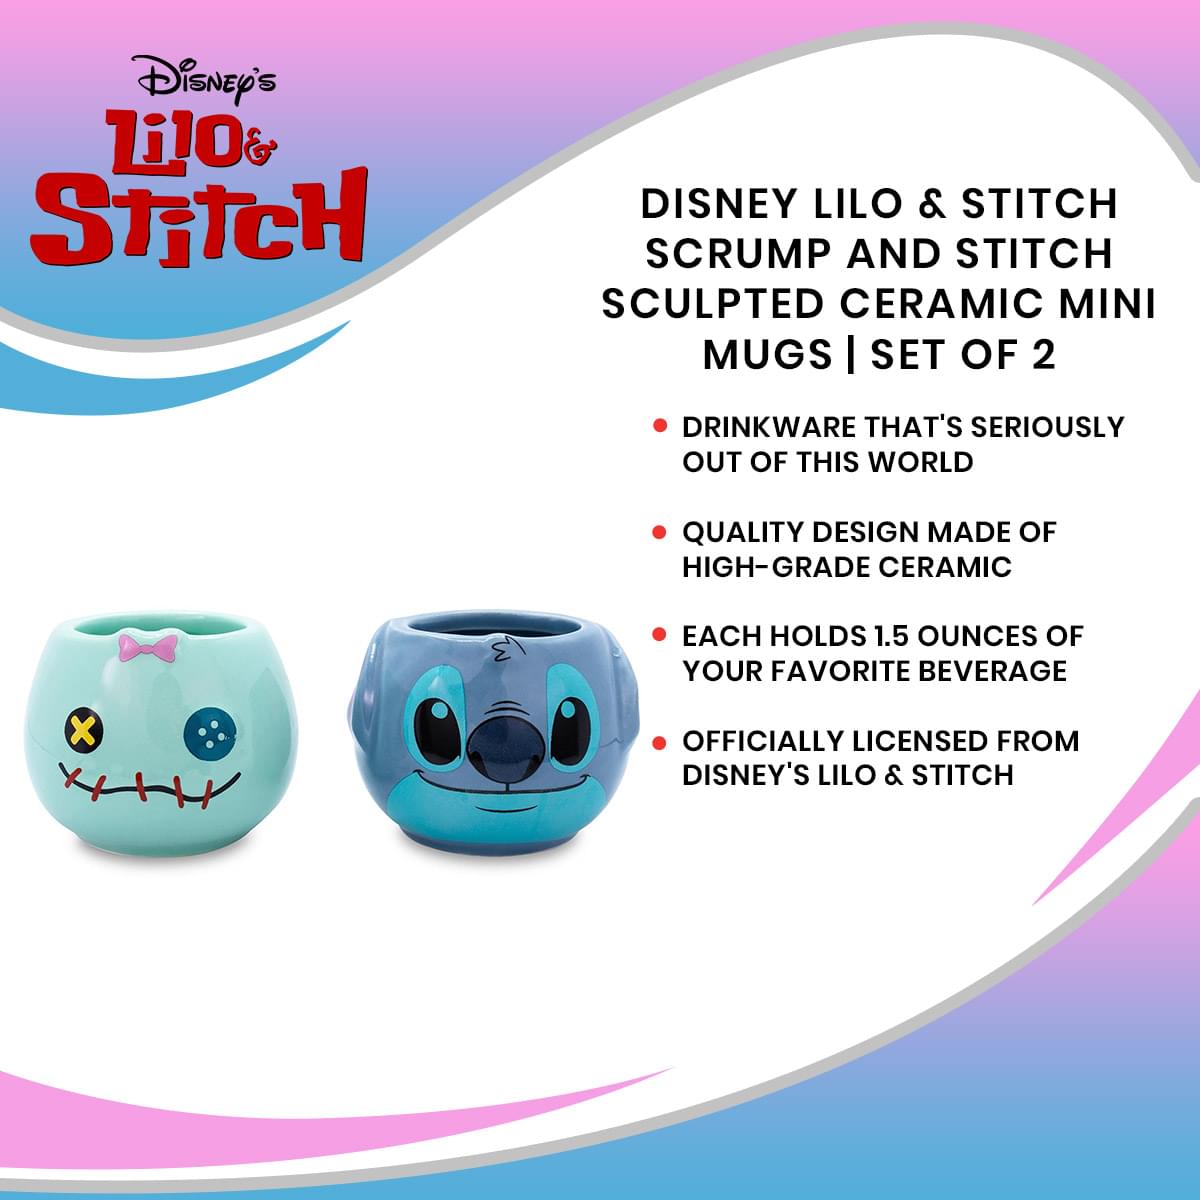 Disney Stitch Design A Vinyl™ Figure Kit